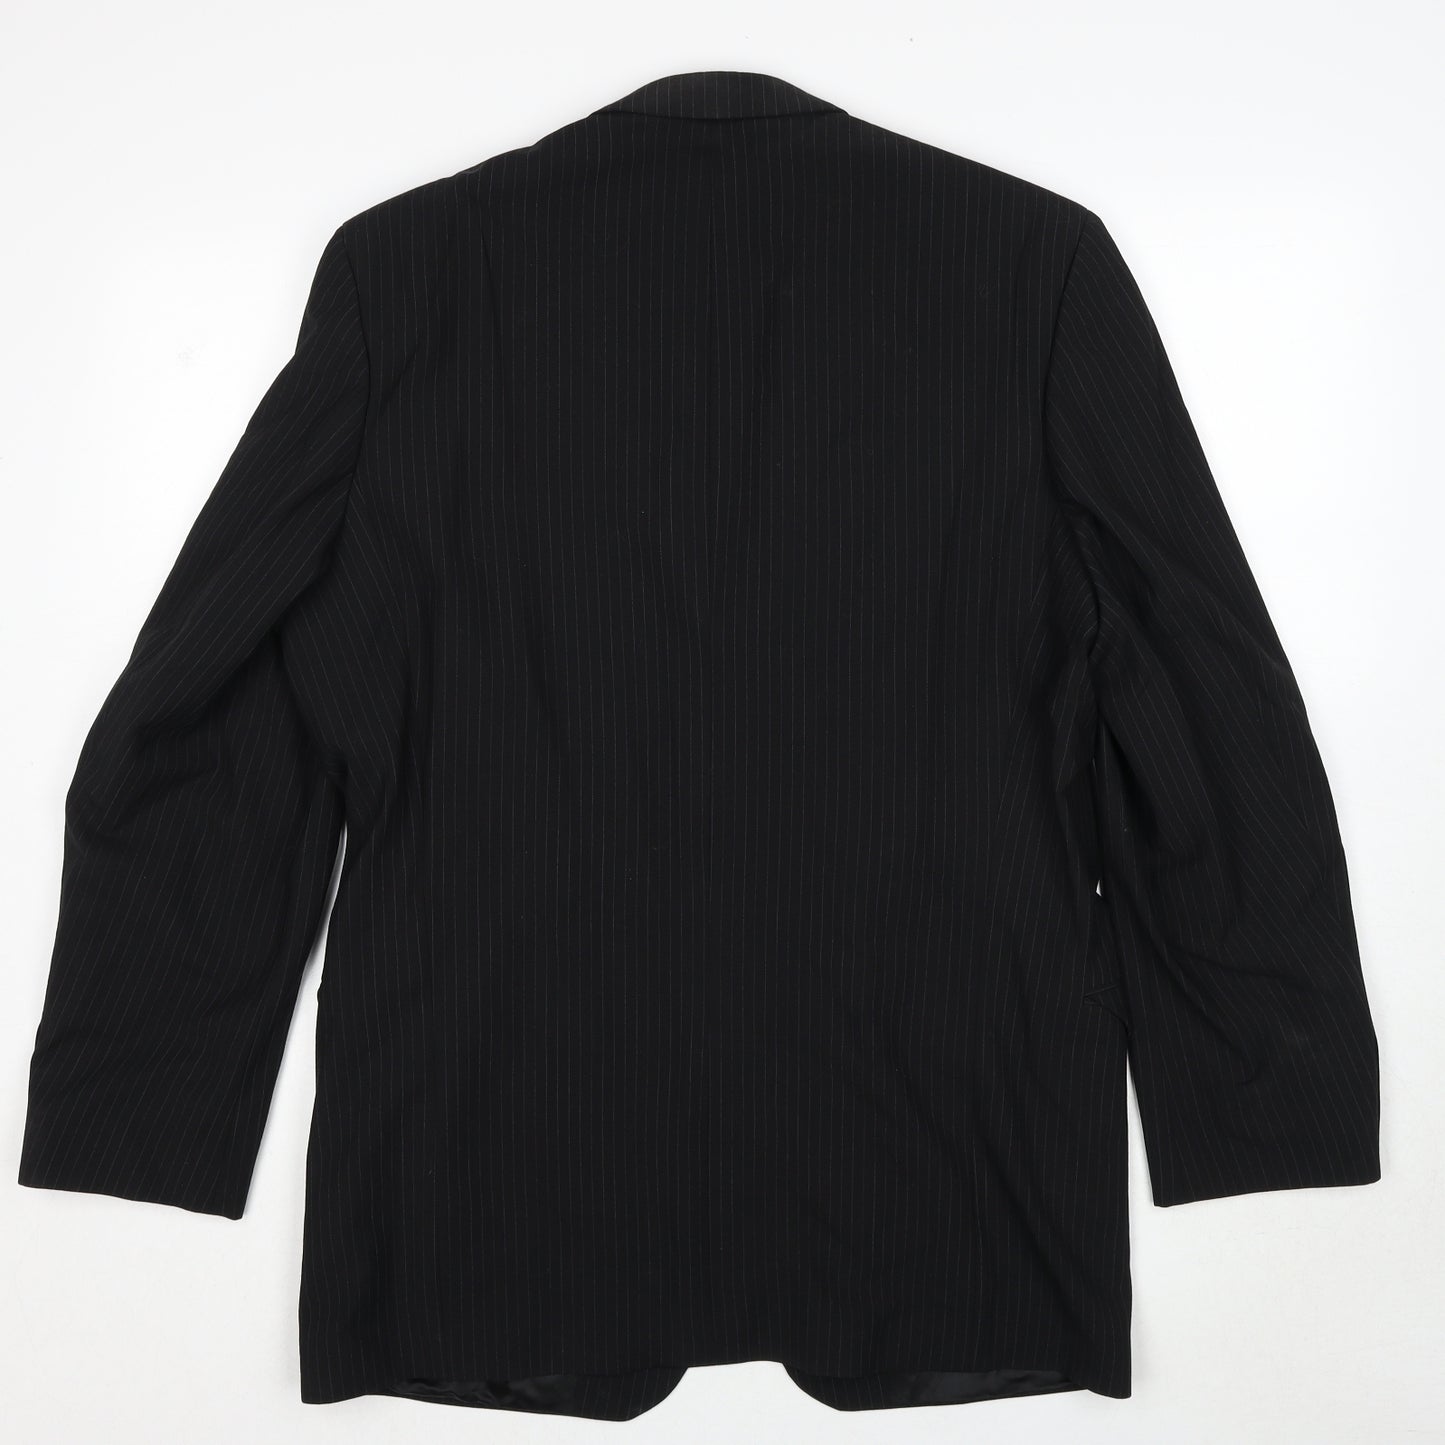 NEXT Mens Black Striped Wool Jacket Suit Jacket Size 40 Regular